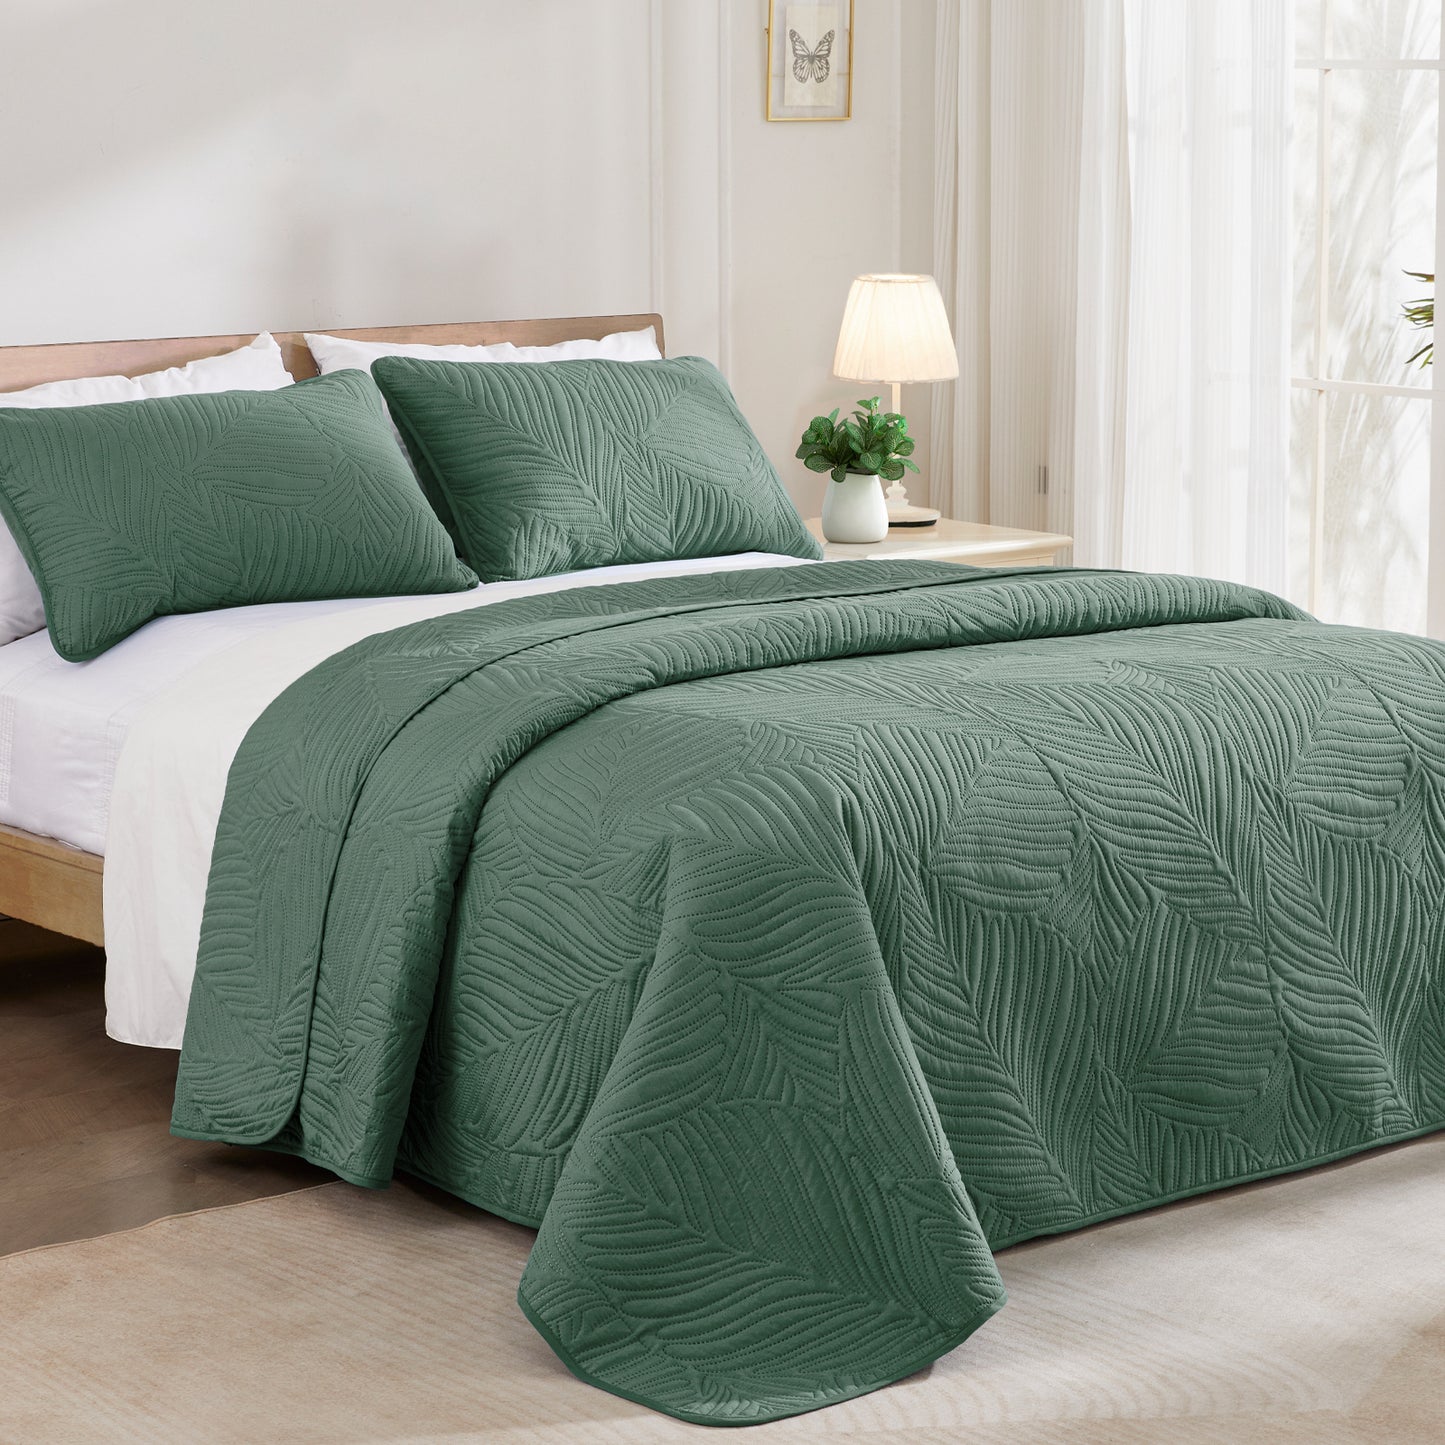 Exclusivo Mezcla California King Quilt Set Green, Lightweight Bedspread Leaf Pattern Bed Cover Soft Coverlet Bedding Set(1 Quilt, 2 Pillow Shams)